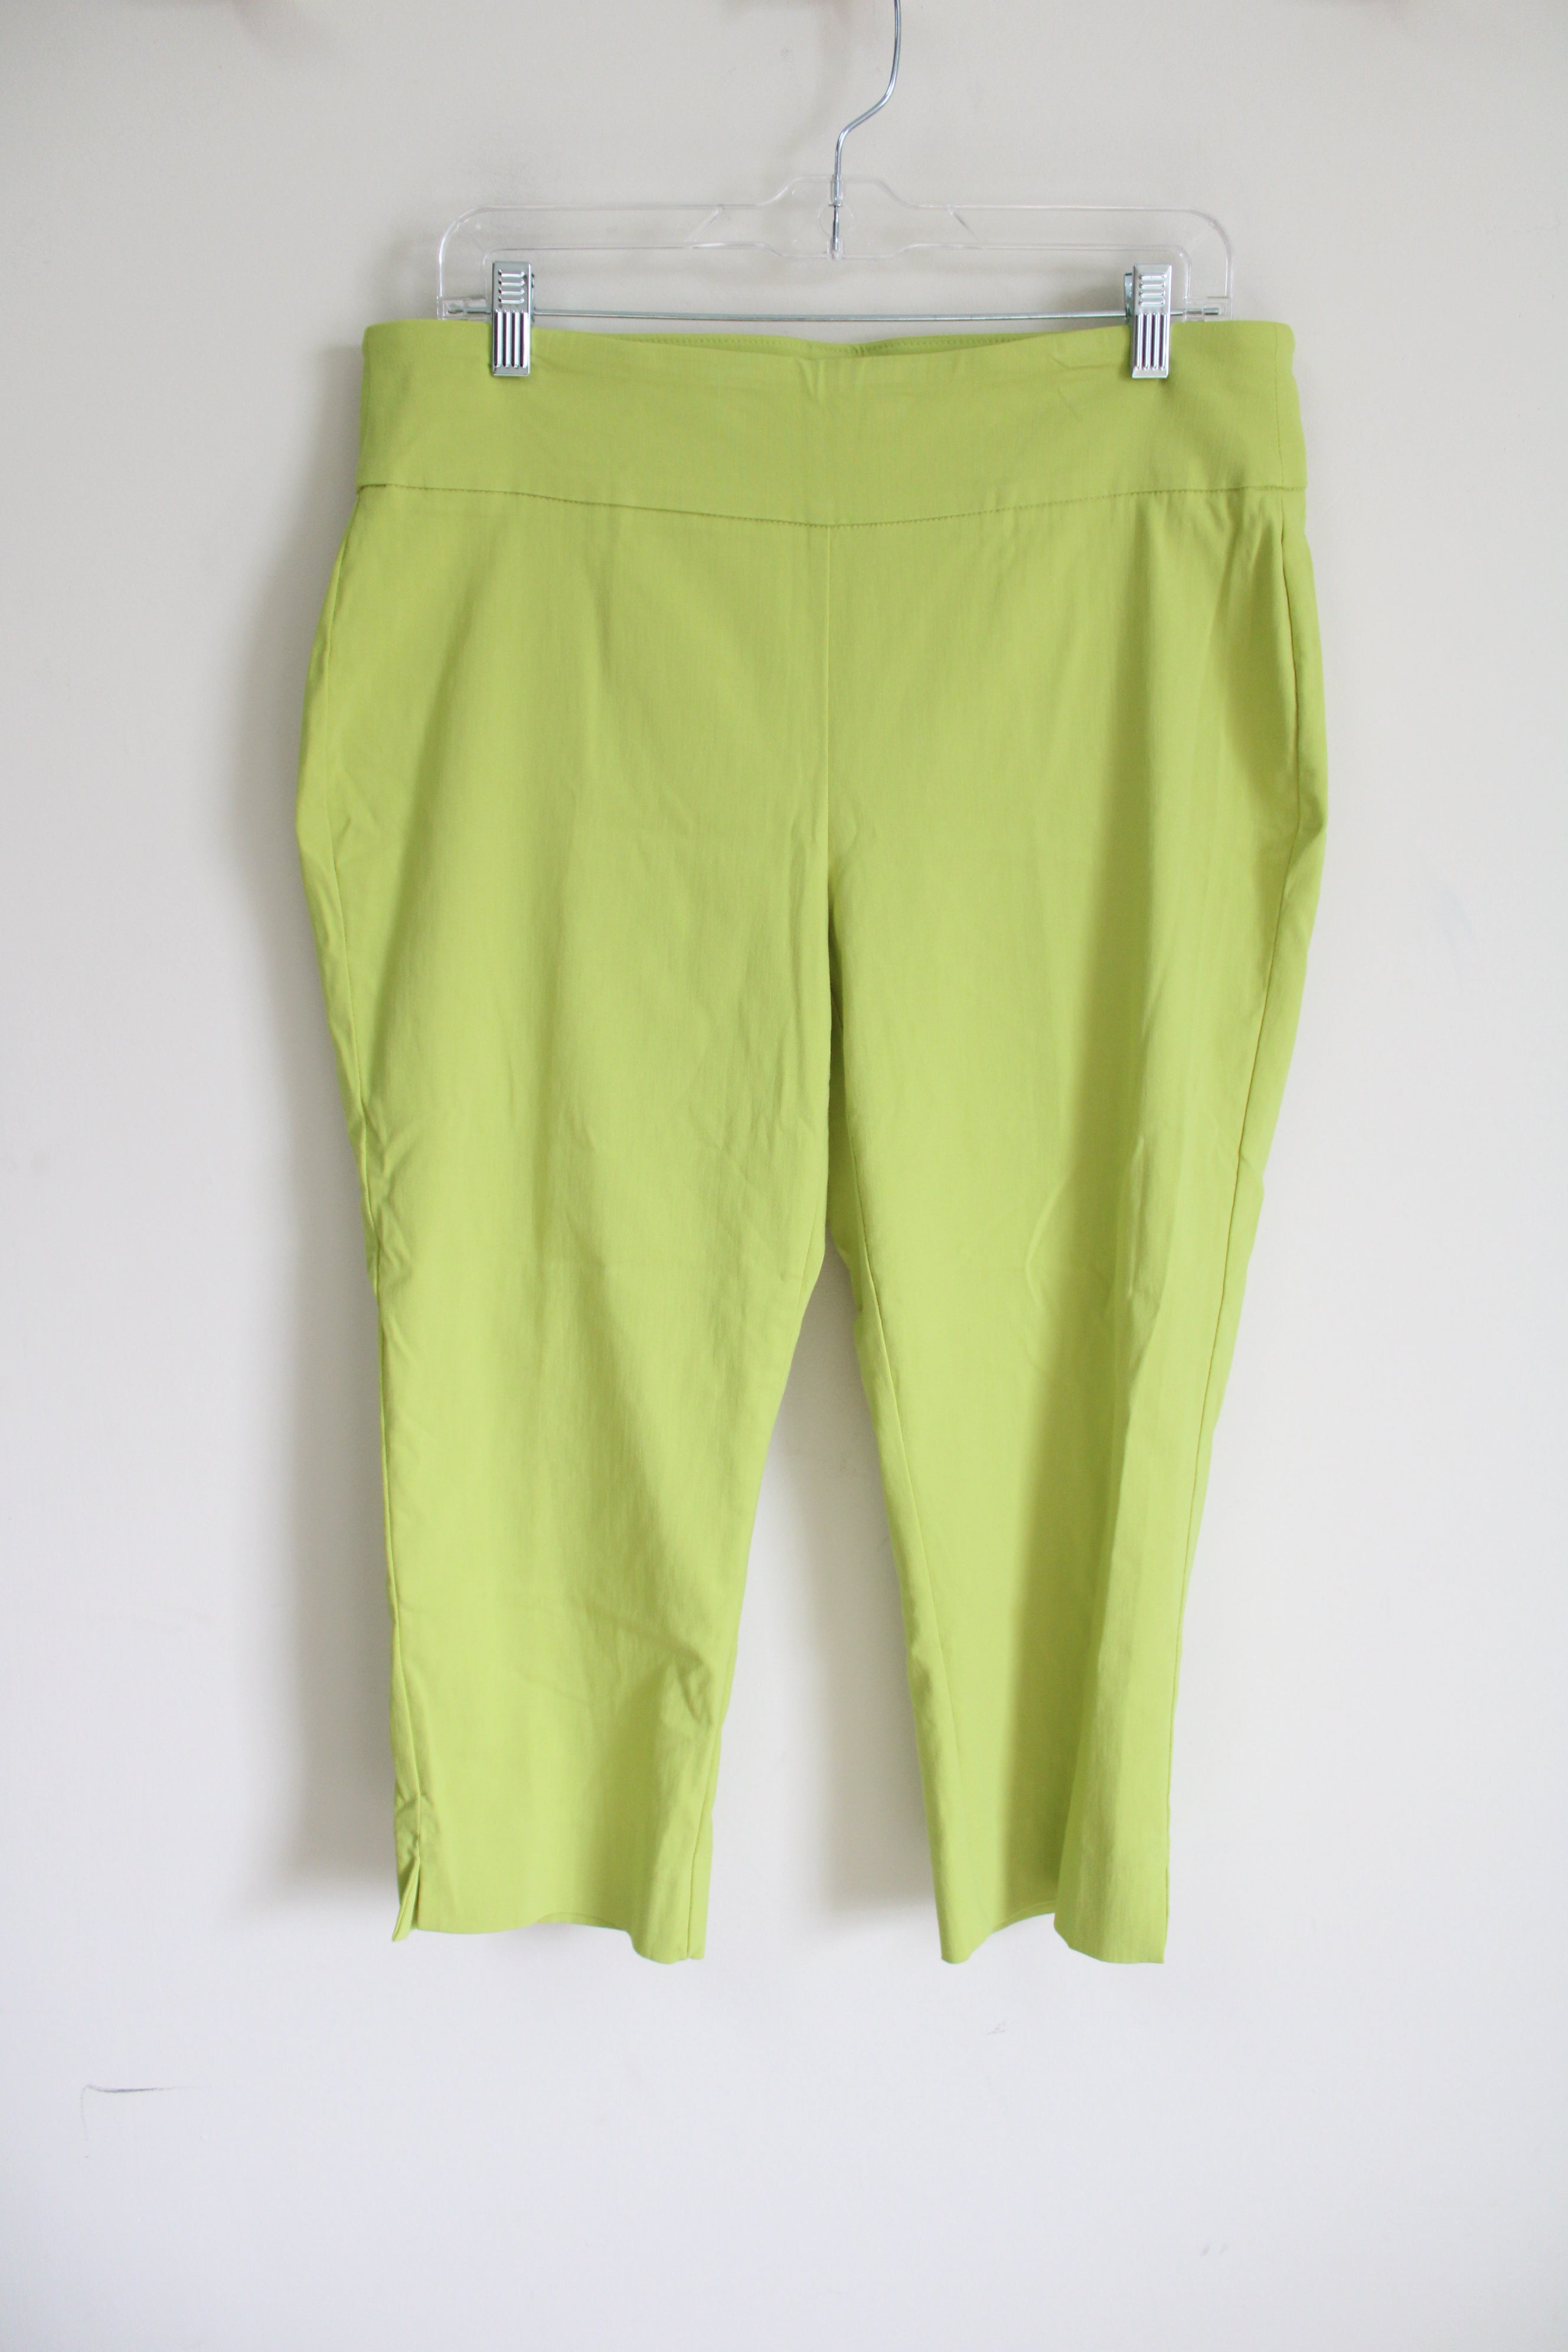 Roz & Ali Neon Green Stretch Capri Pant